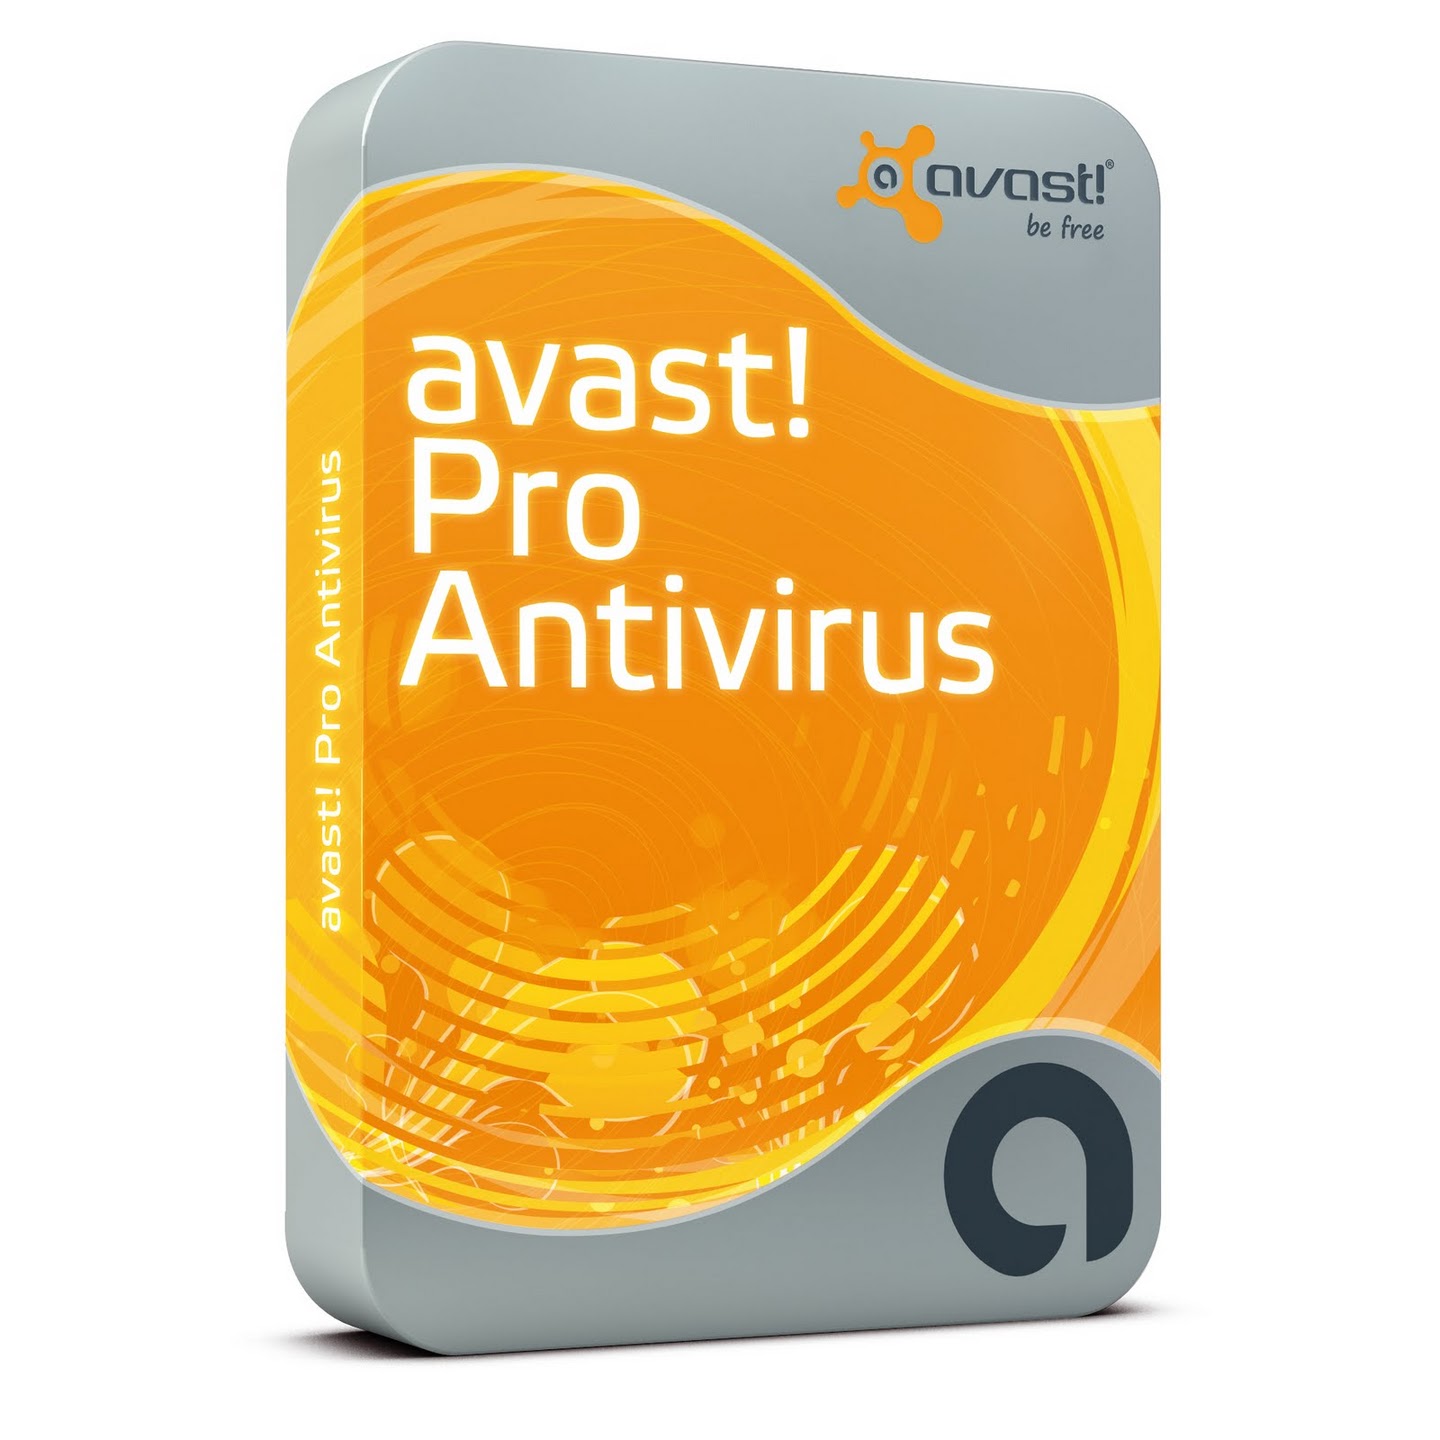 Avast pro antivirus serial key free